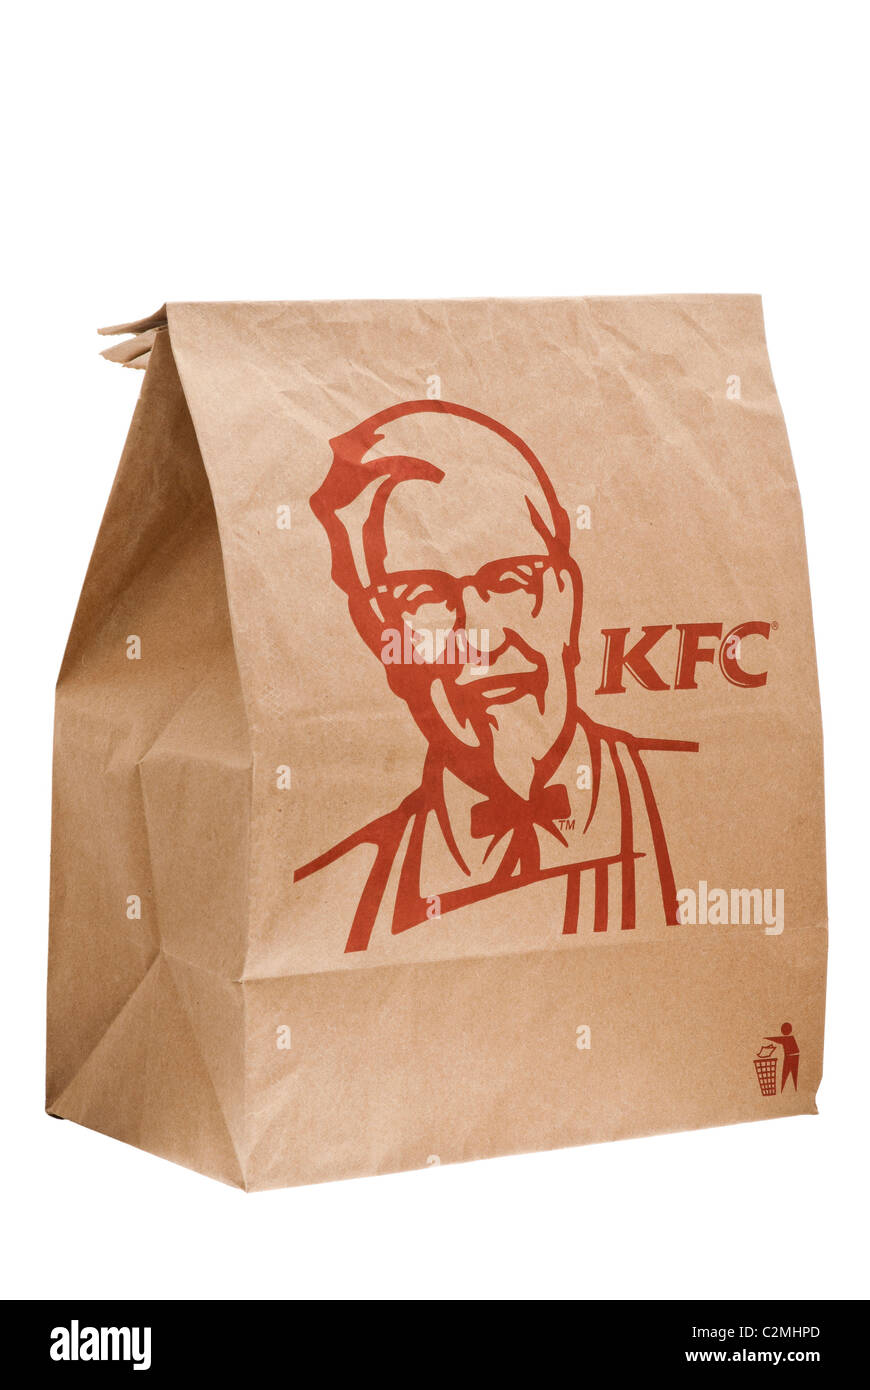 KFC Meal to Take Away Stock Photo